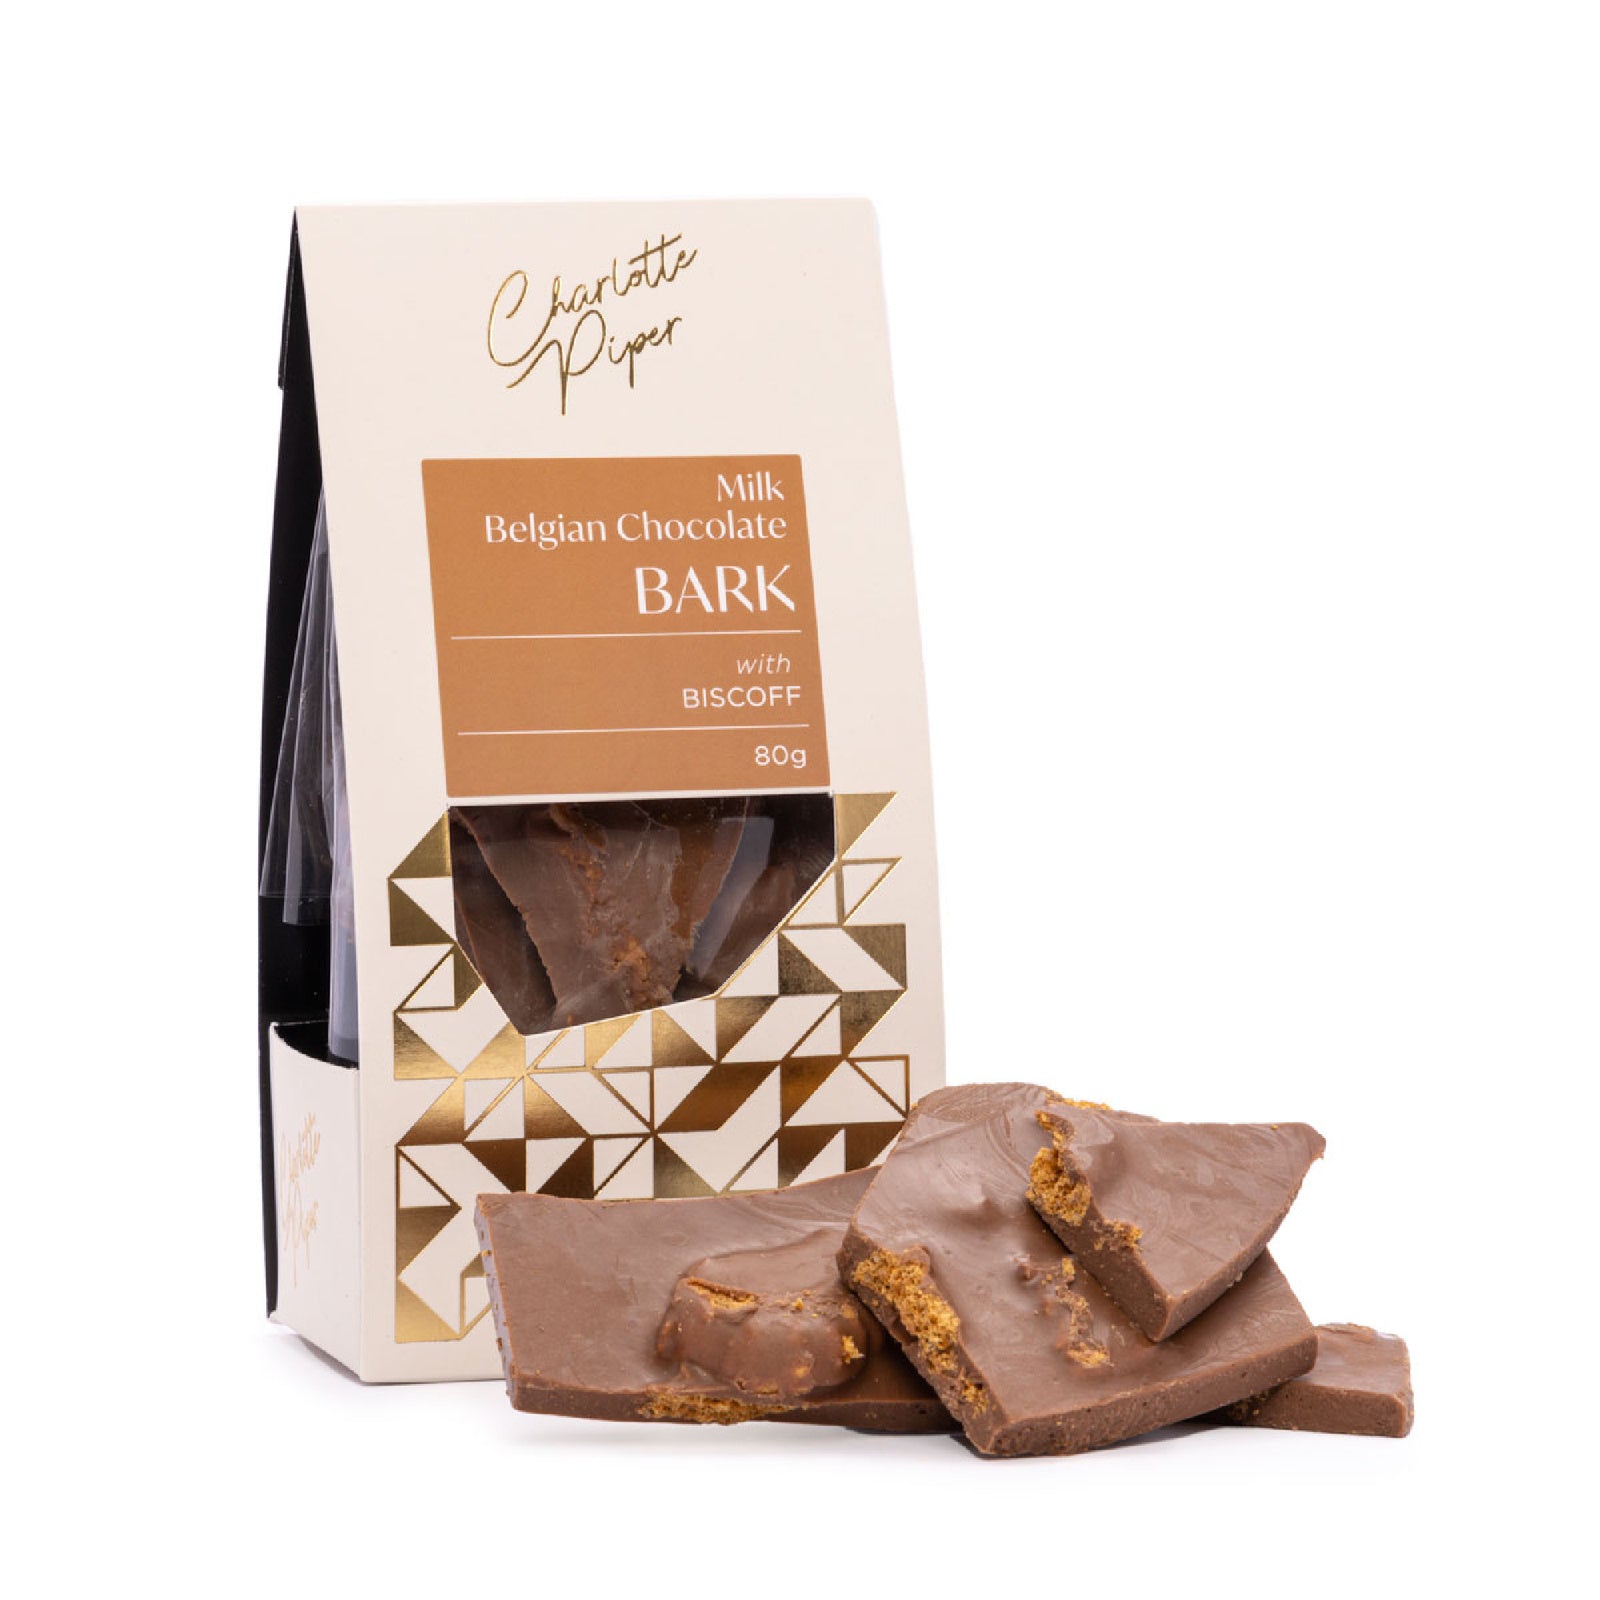 Mill & Hide - Gourmet Brands - Charlotte Piper Milk Chocolate Bark - Biscoff